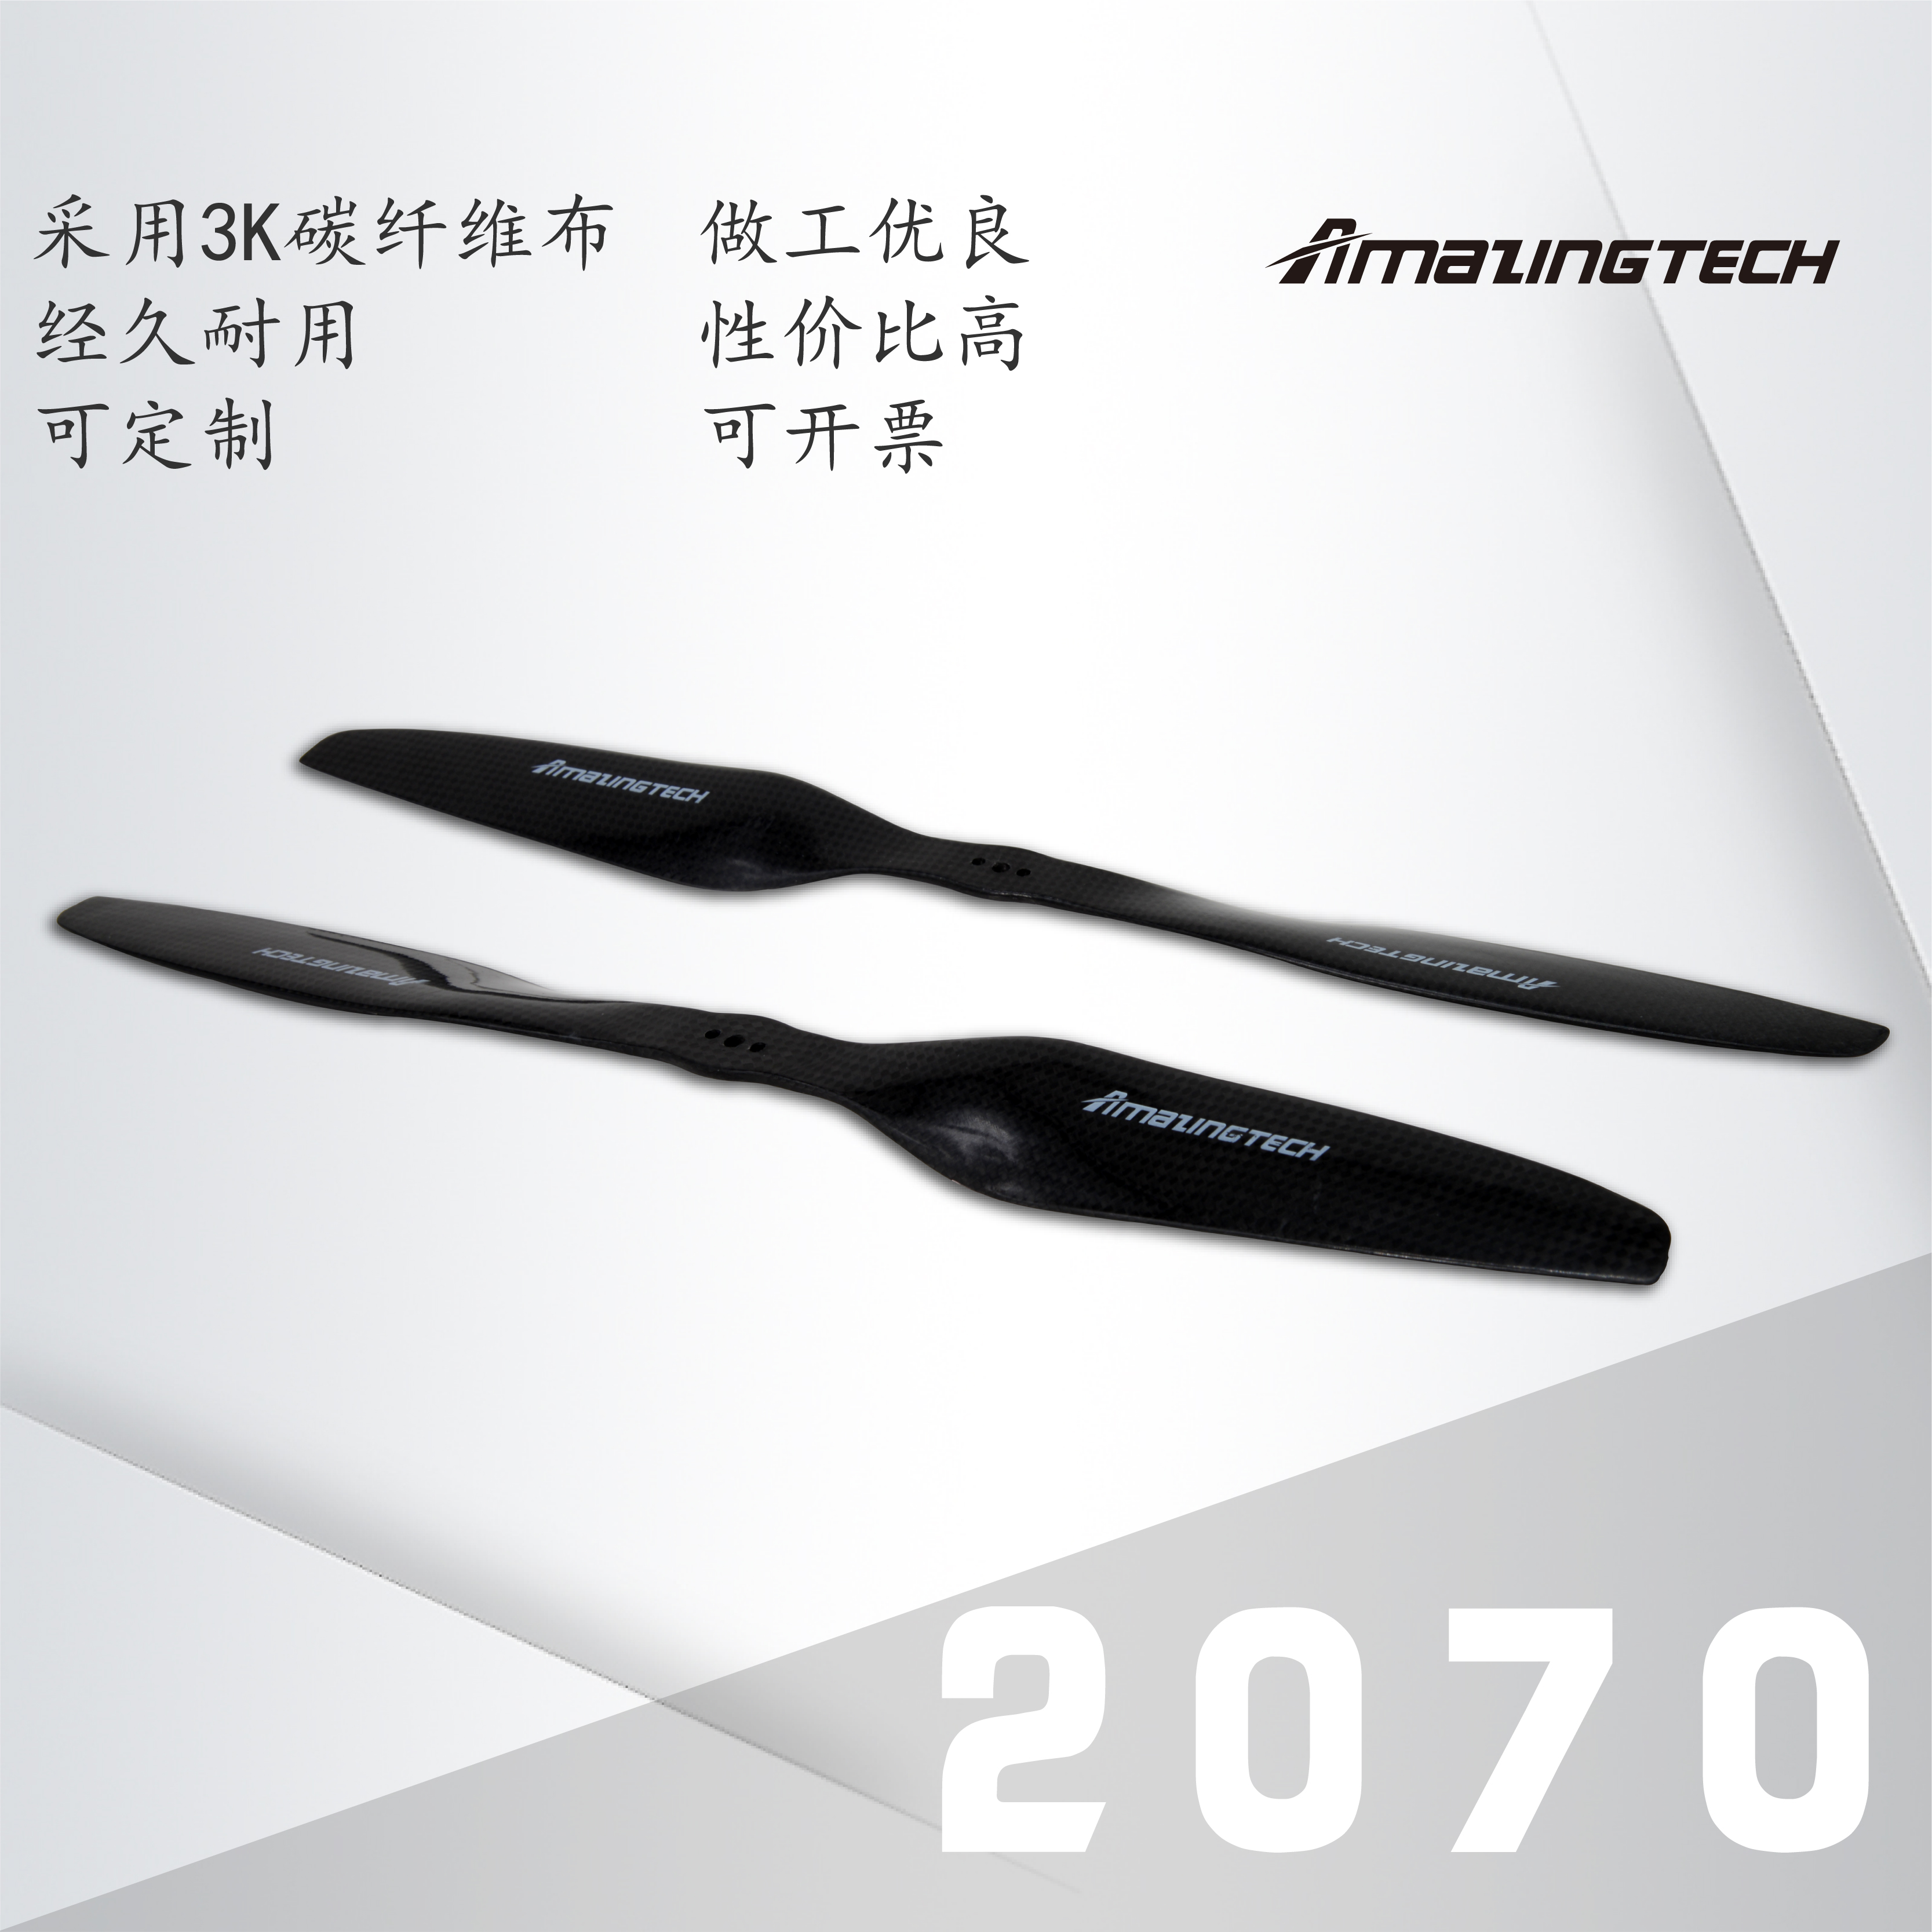 UAV 블레이드 프로펠러 탄소 섬유 블레이드 네 축 항공기 액세서리 탄소 섬유 프로펠러 2070